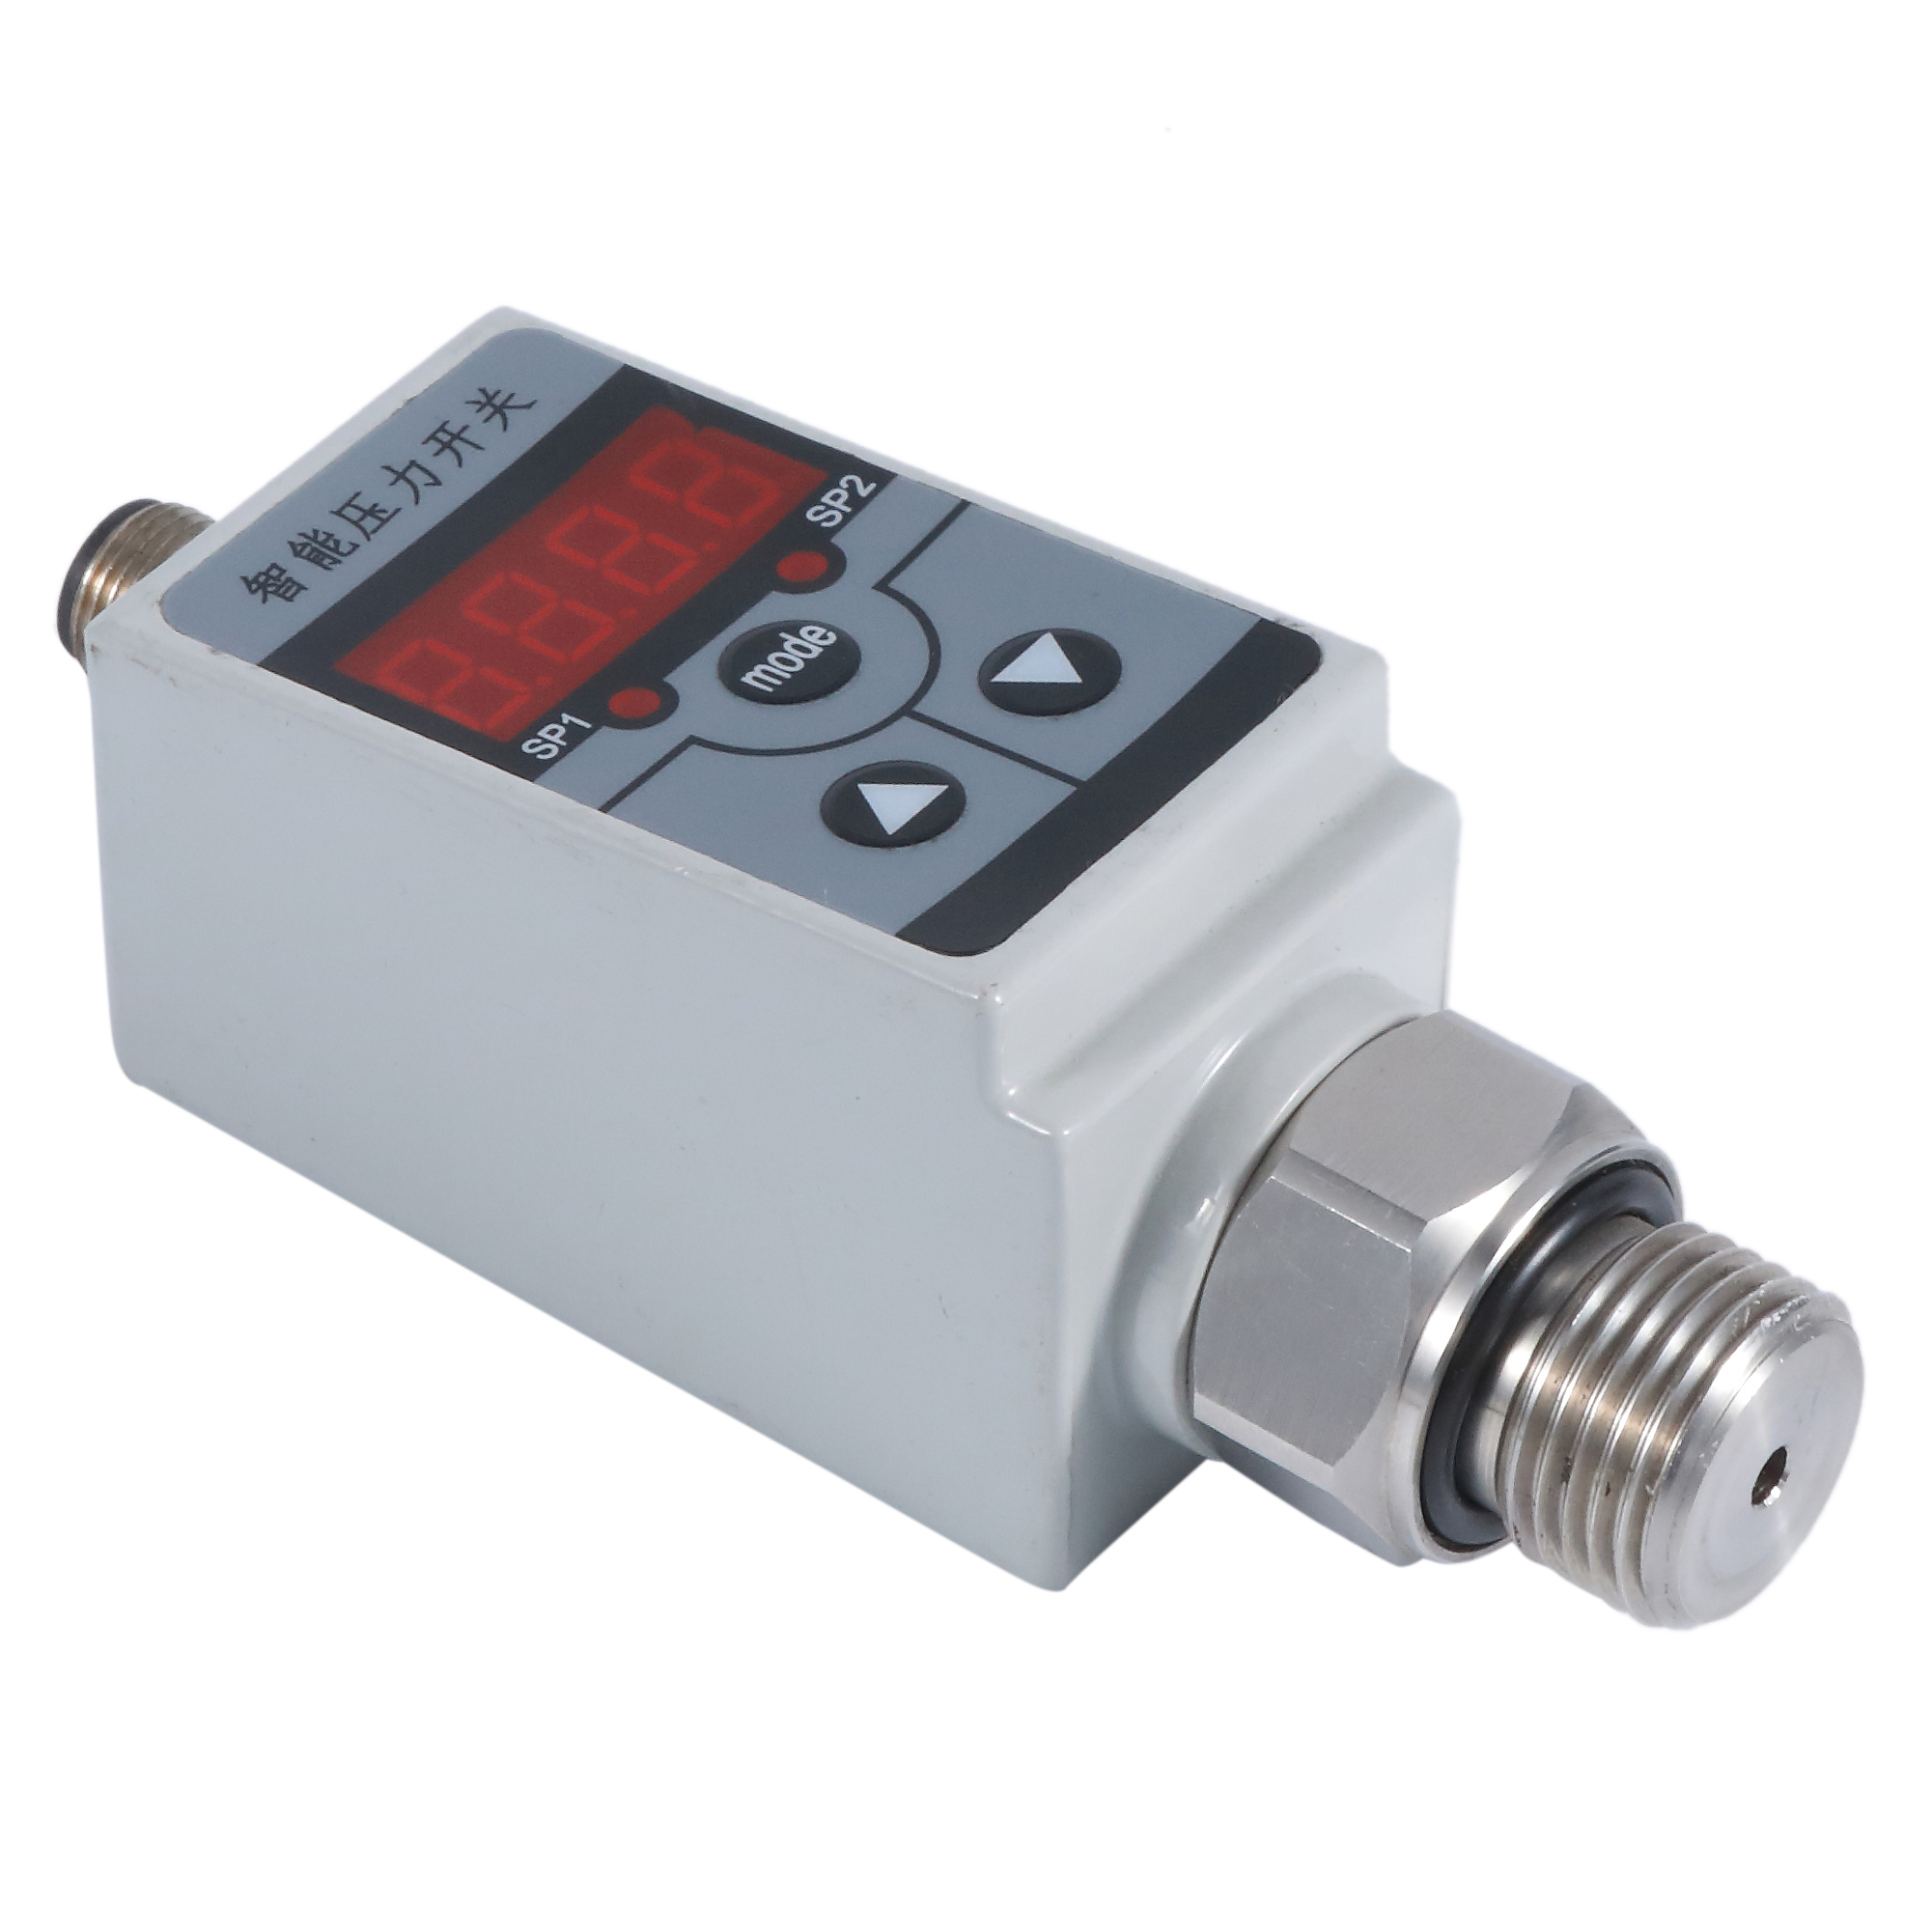 HPM560 Intelligent Pressure Switch